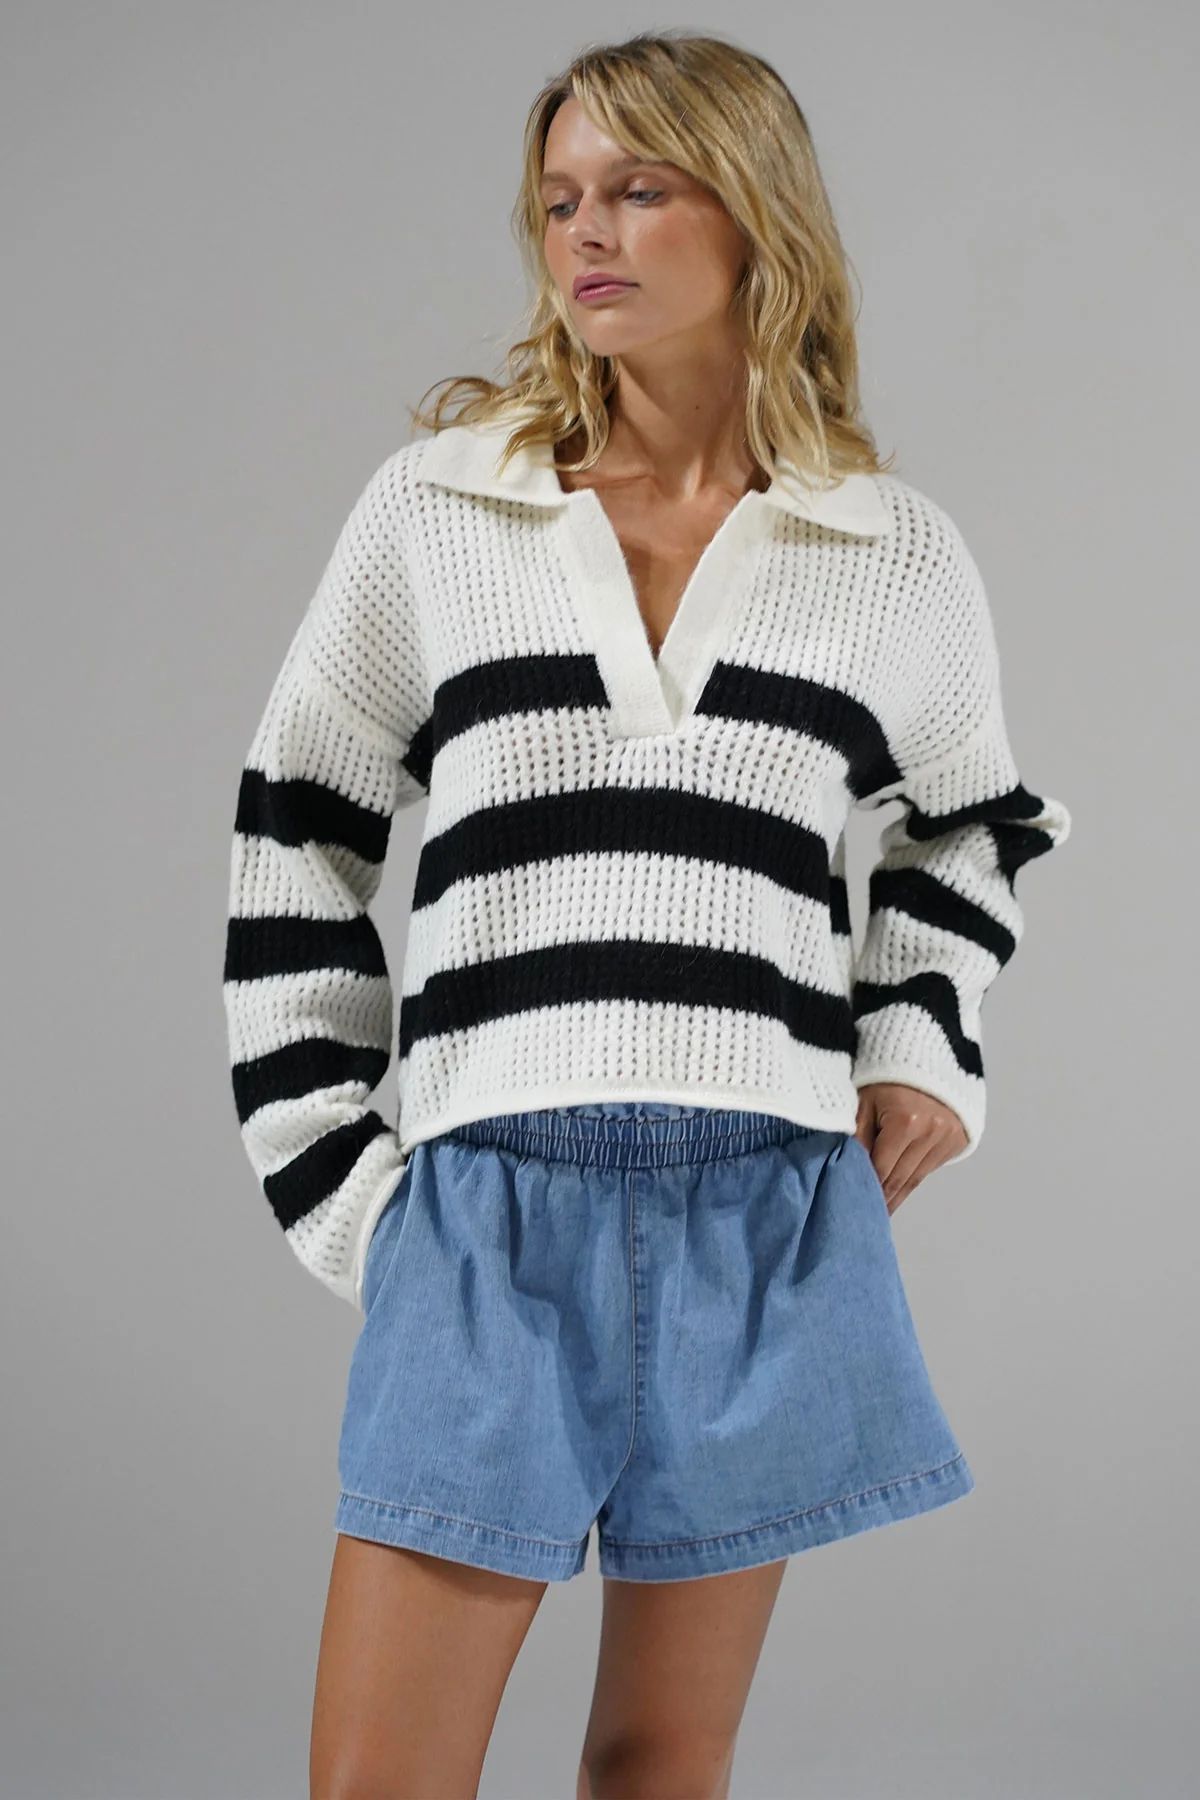 LNA Ari Stripe Sweater in Ivory Black Stripe | LNA Clothing